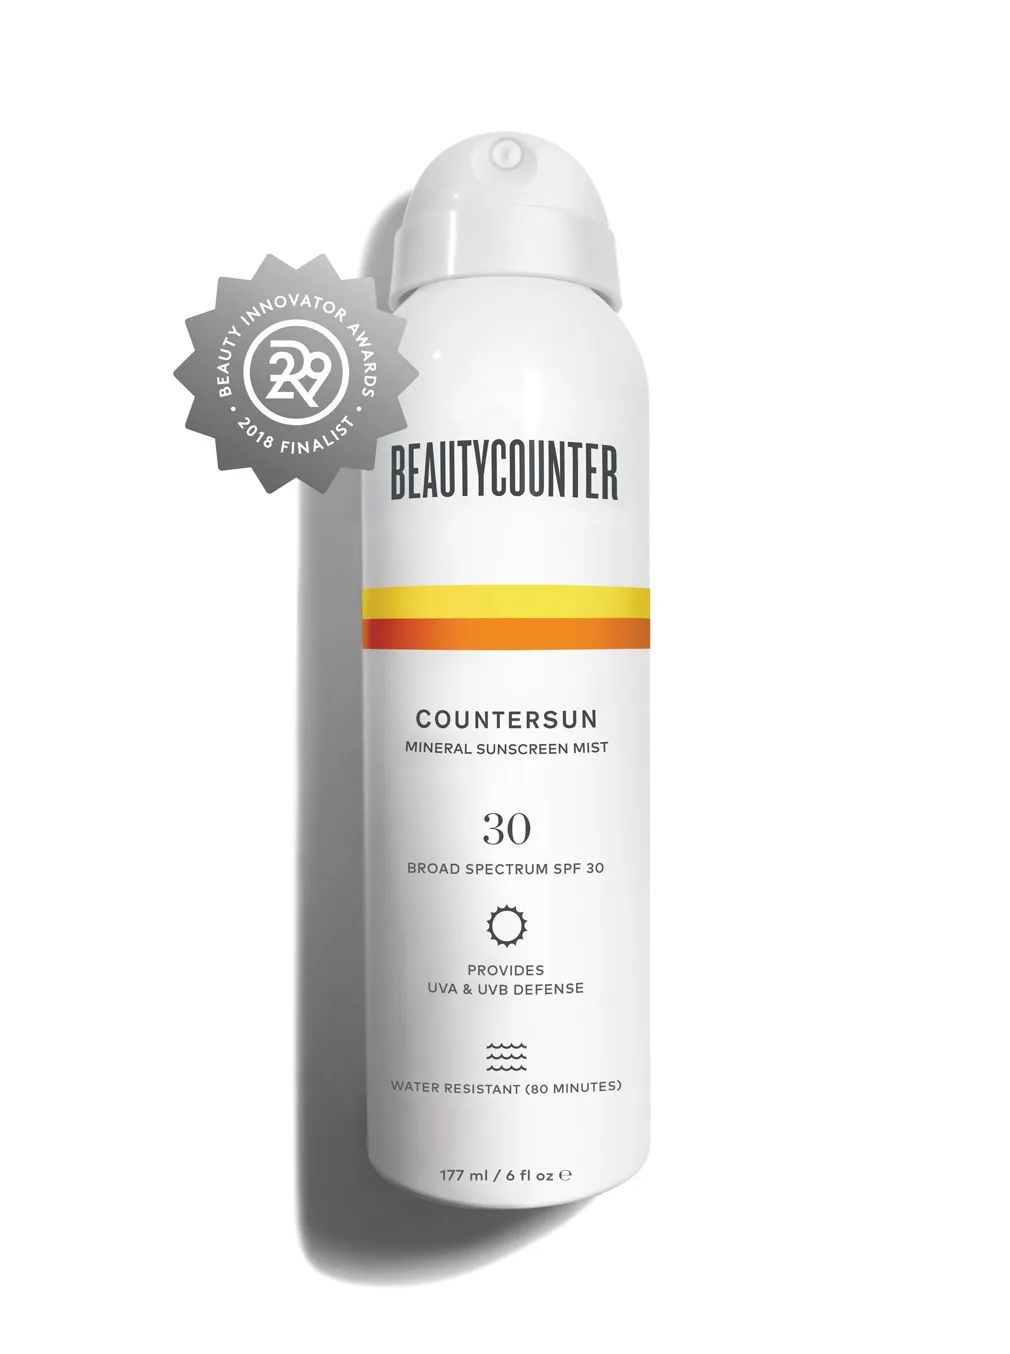 Countersun Mineral Sunscreen Mist SPF 30, 6 oz. - Beautycounter - Skin Care, Makeup, Bath and Bod... | Beautycounter.com